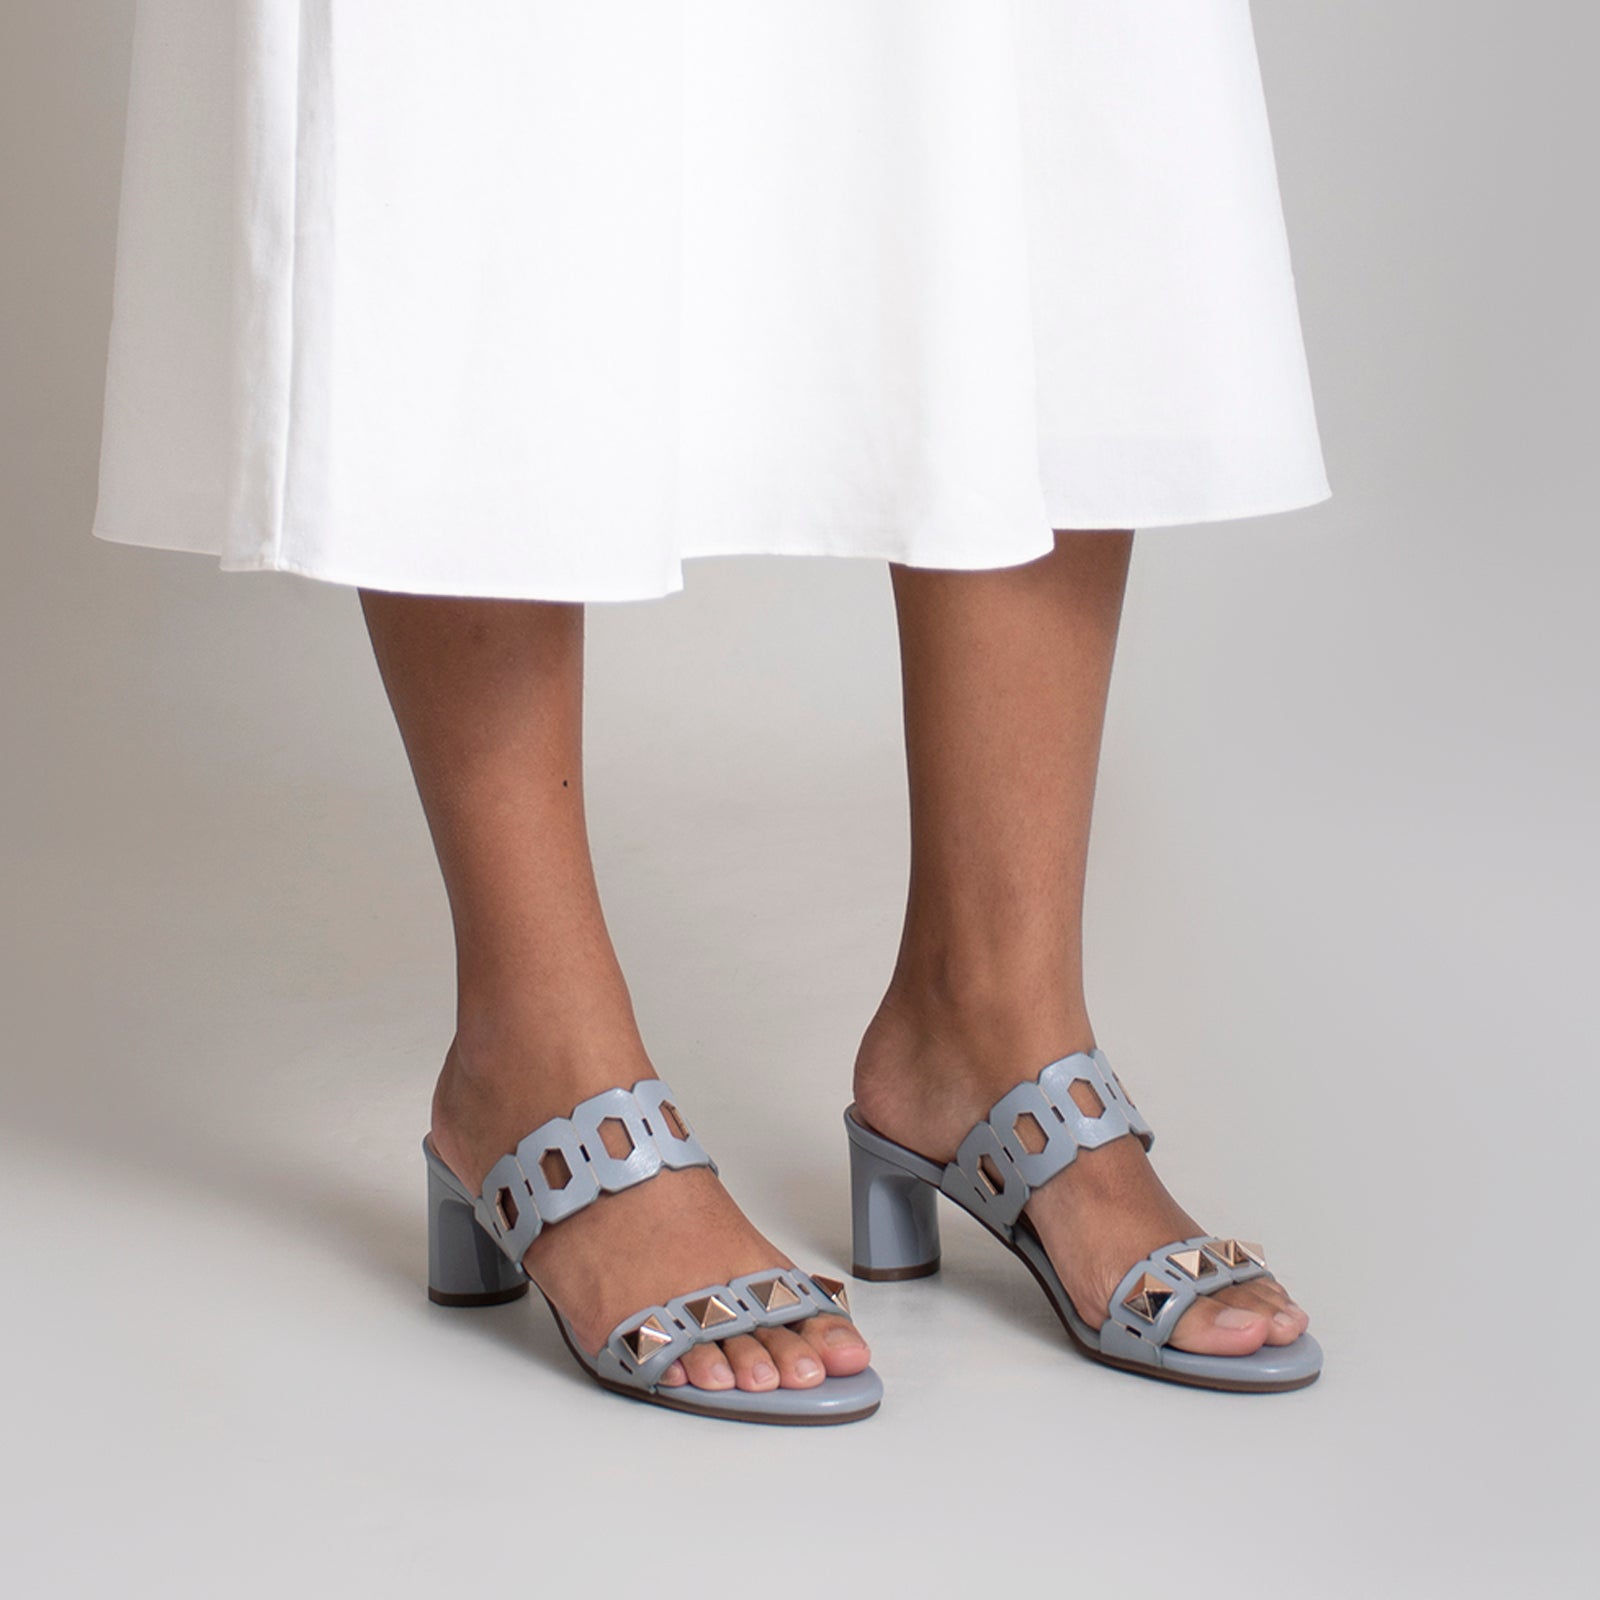 Yarra Sandals